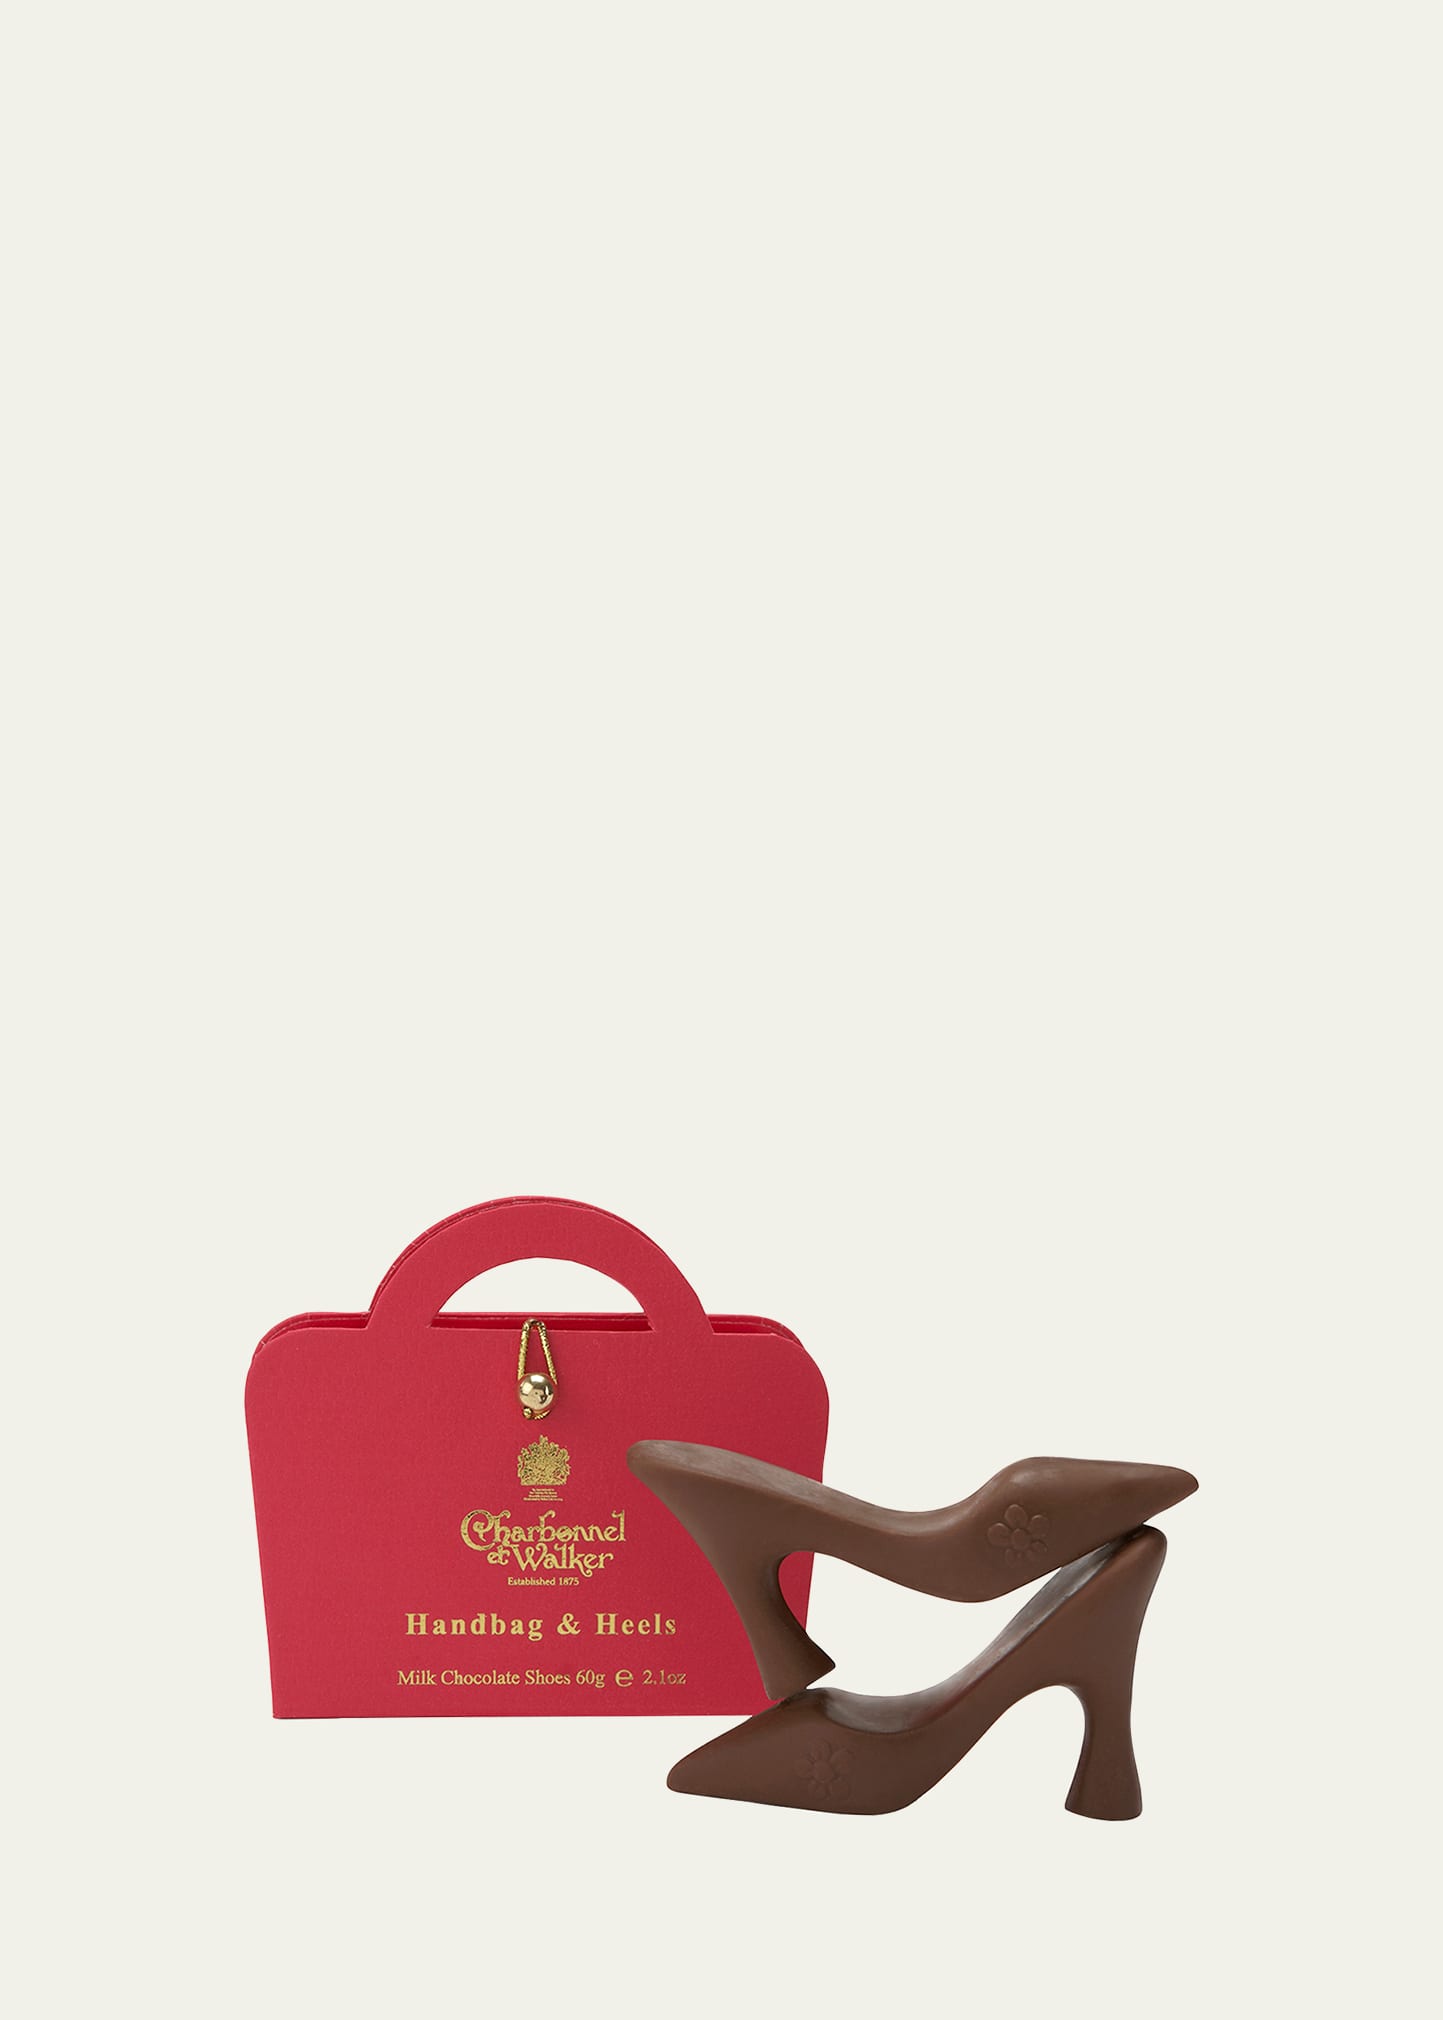 Charbonnel Et Walker Mini "Handbag & Heels" Chocolate Shoes